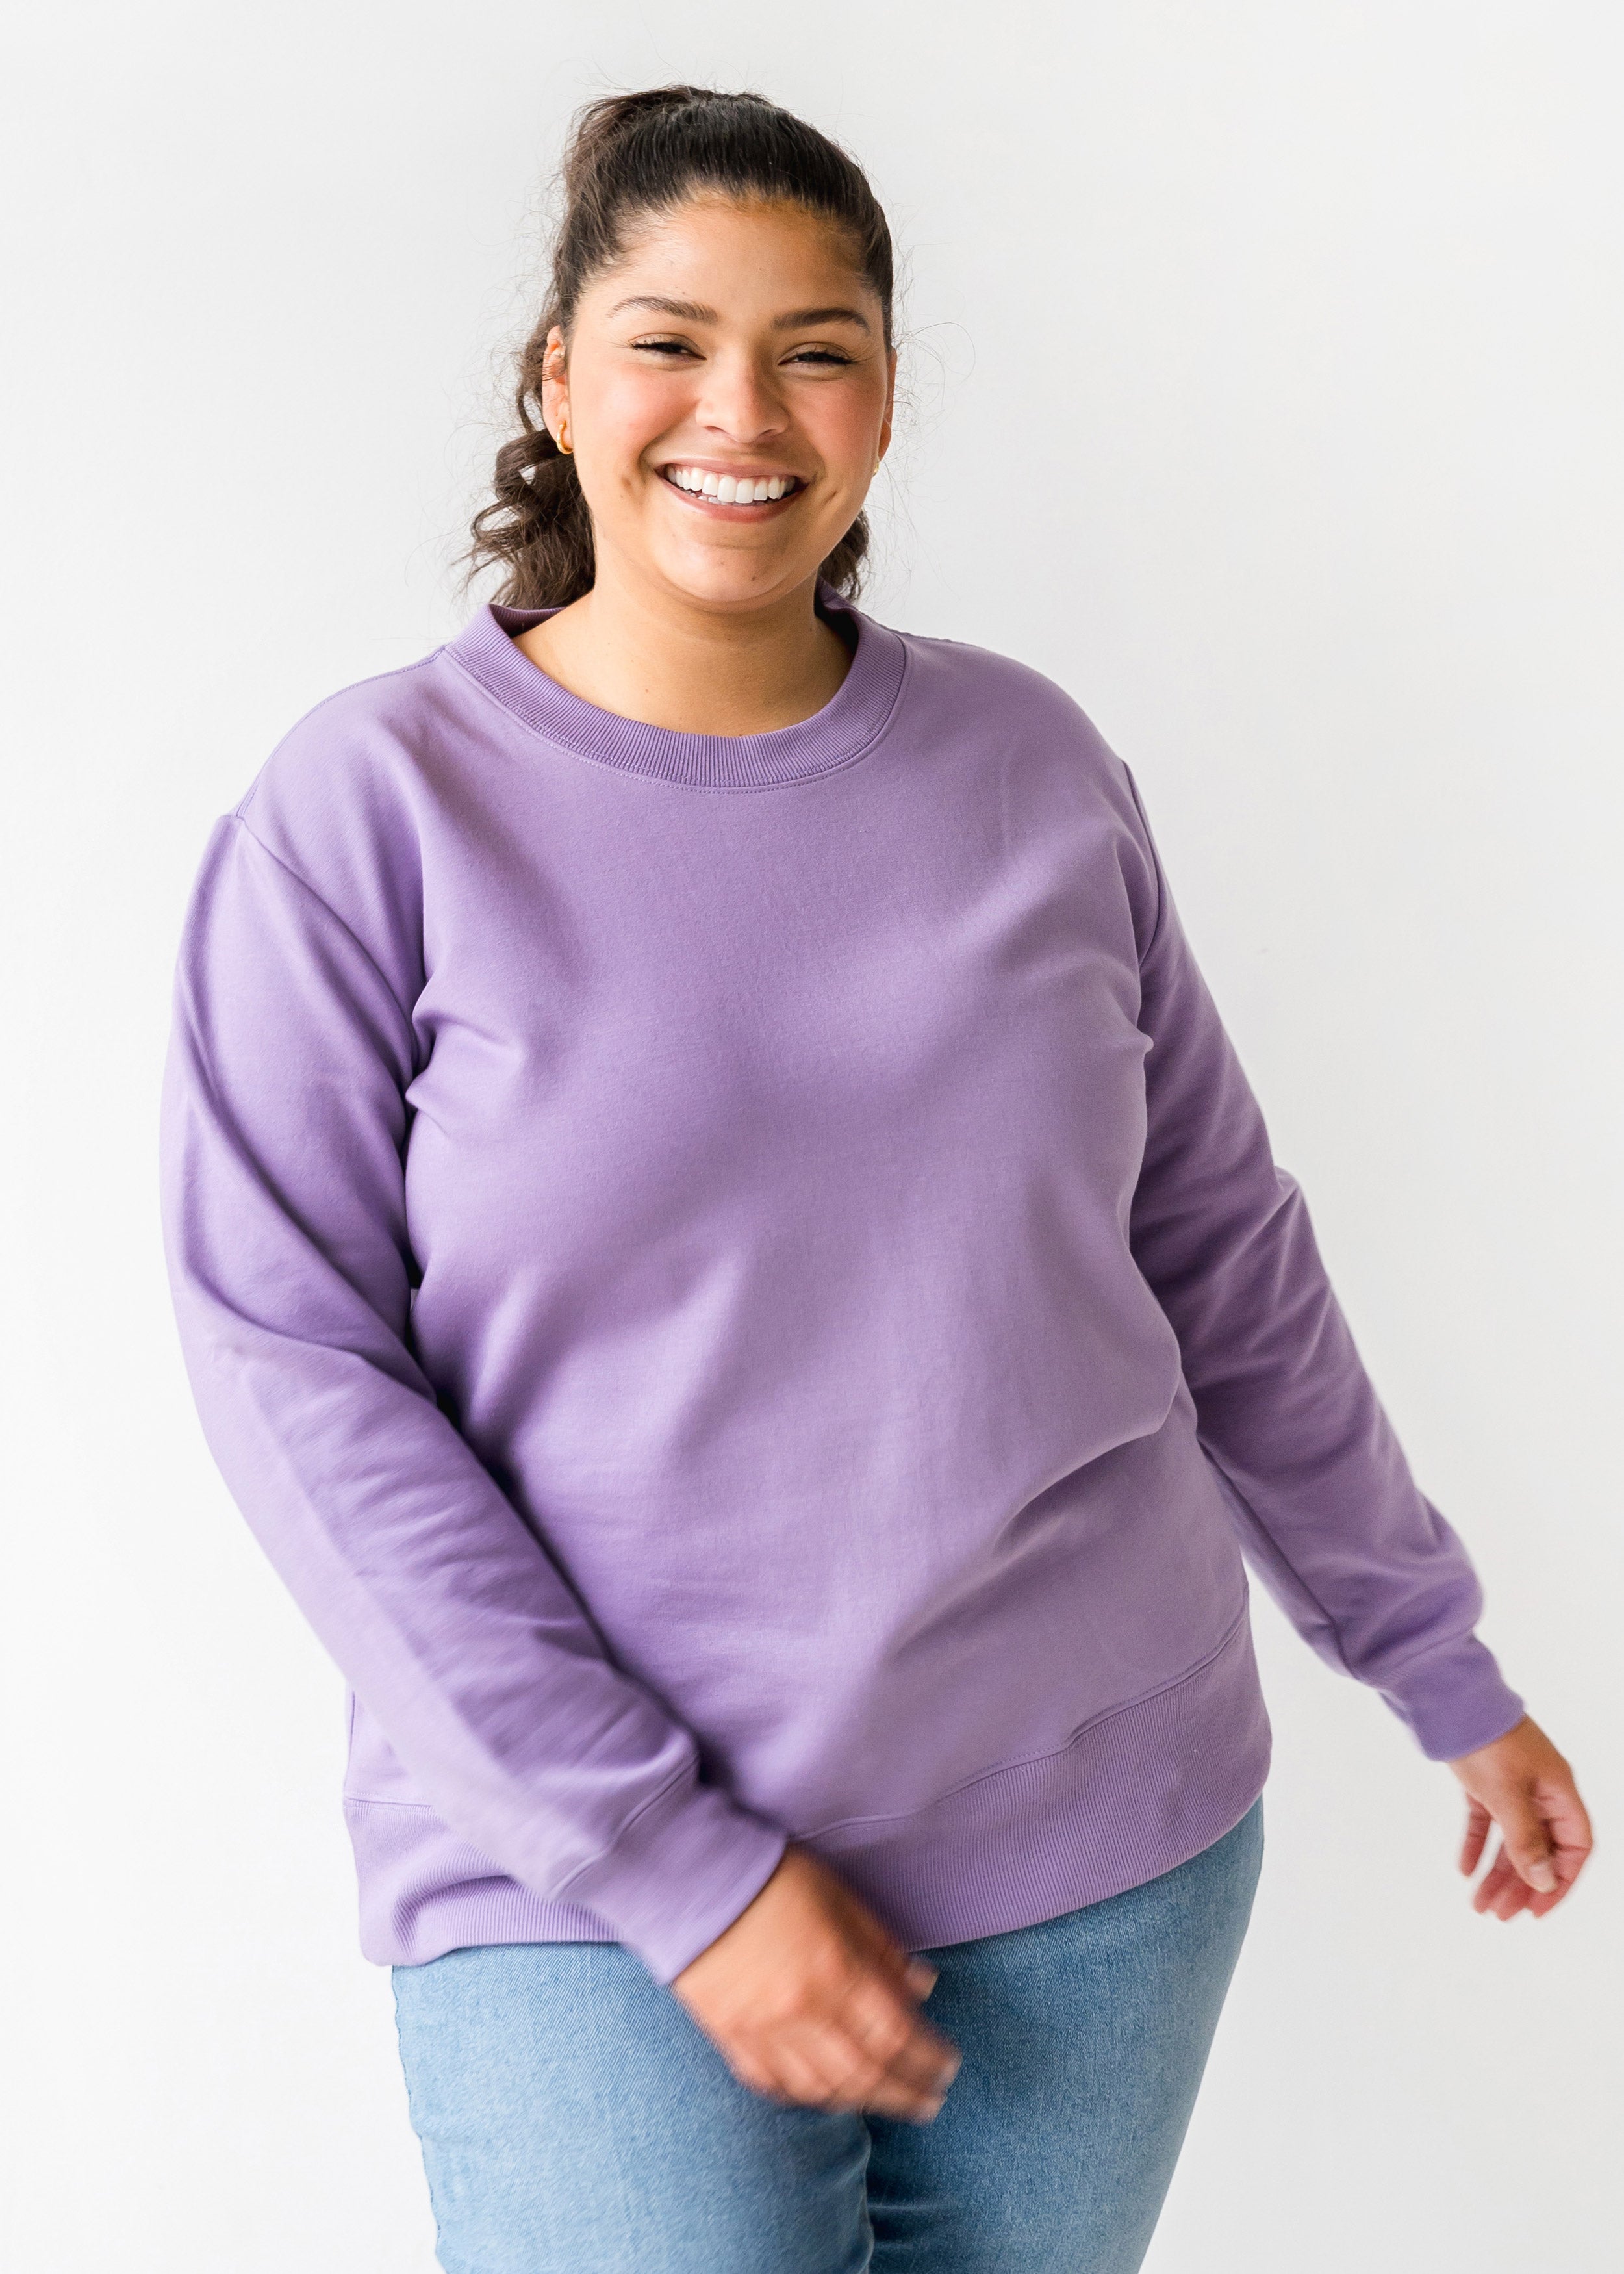 The Crewneck Sweatshirt in Lavender | FRANC Sustainable Clothing